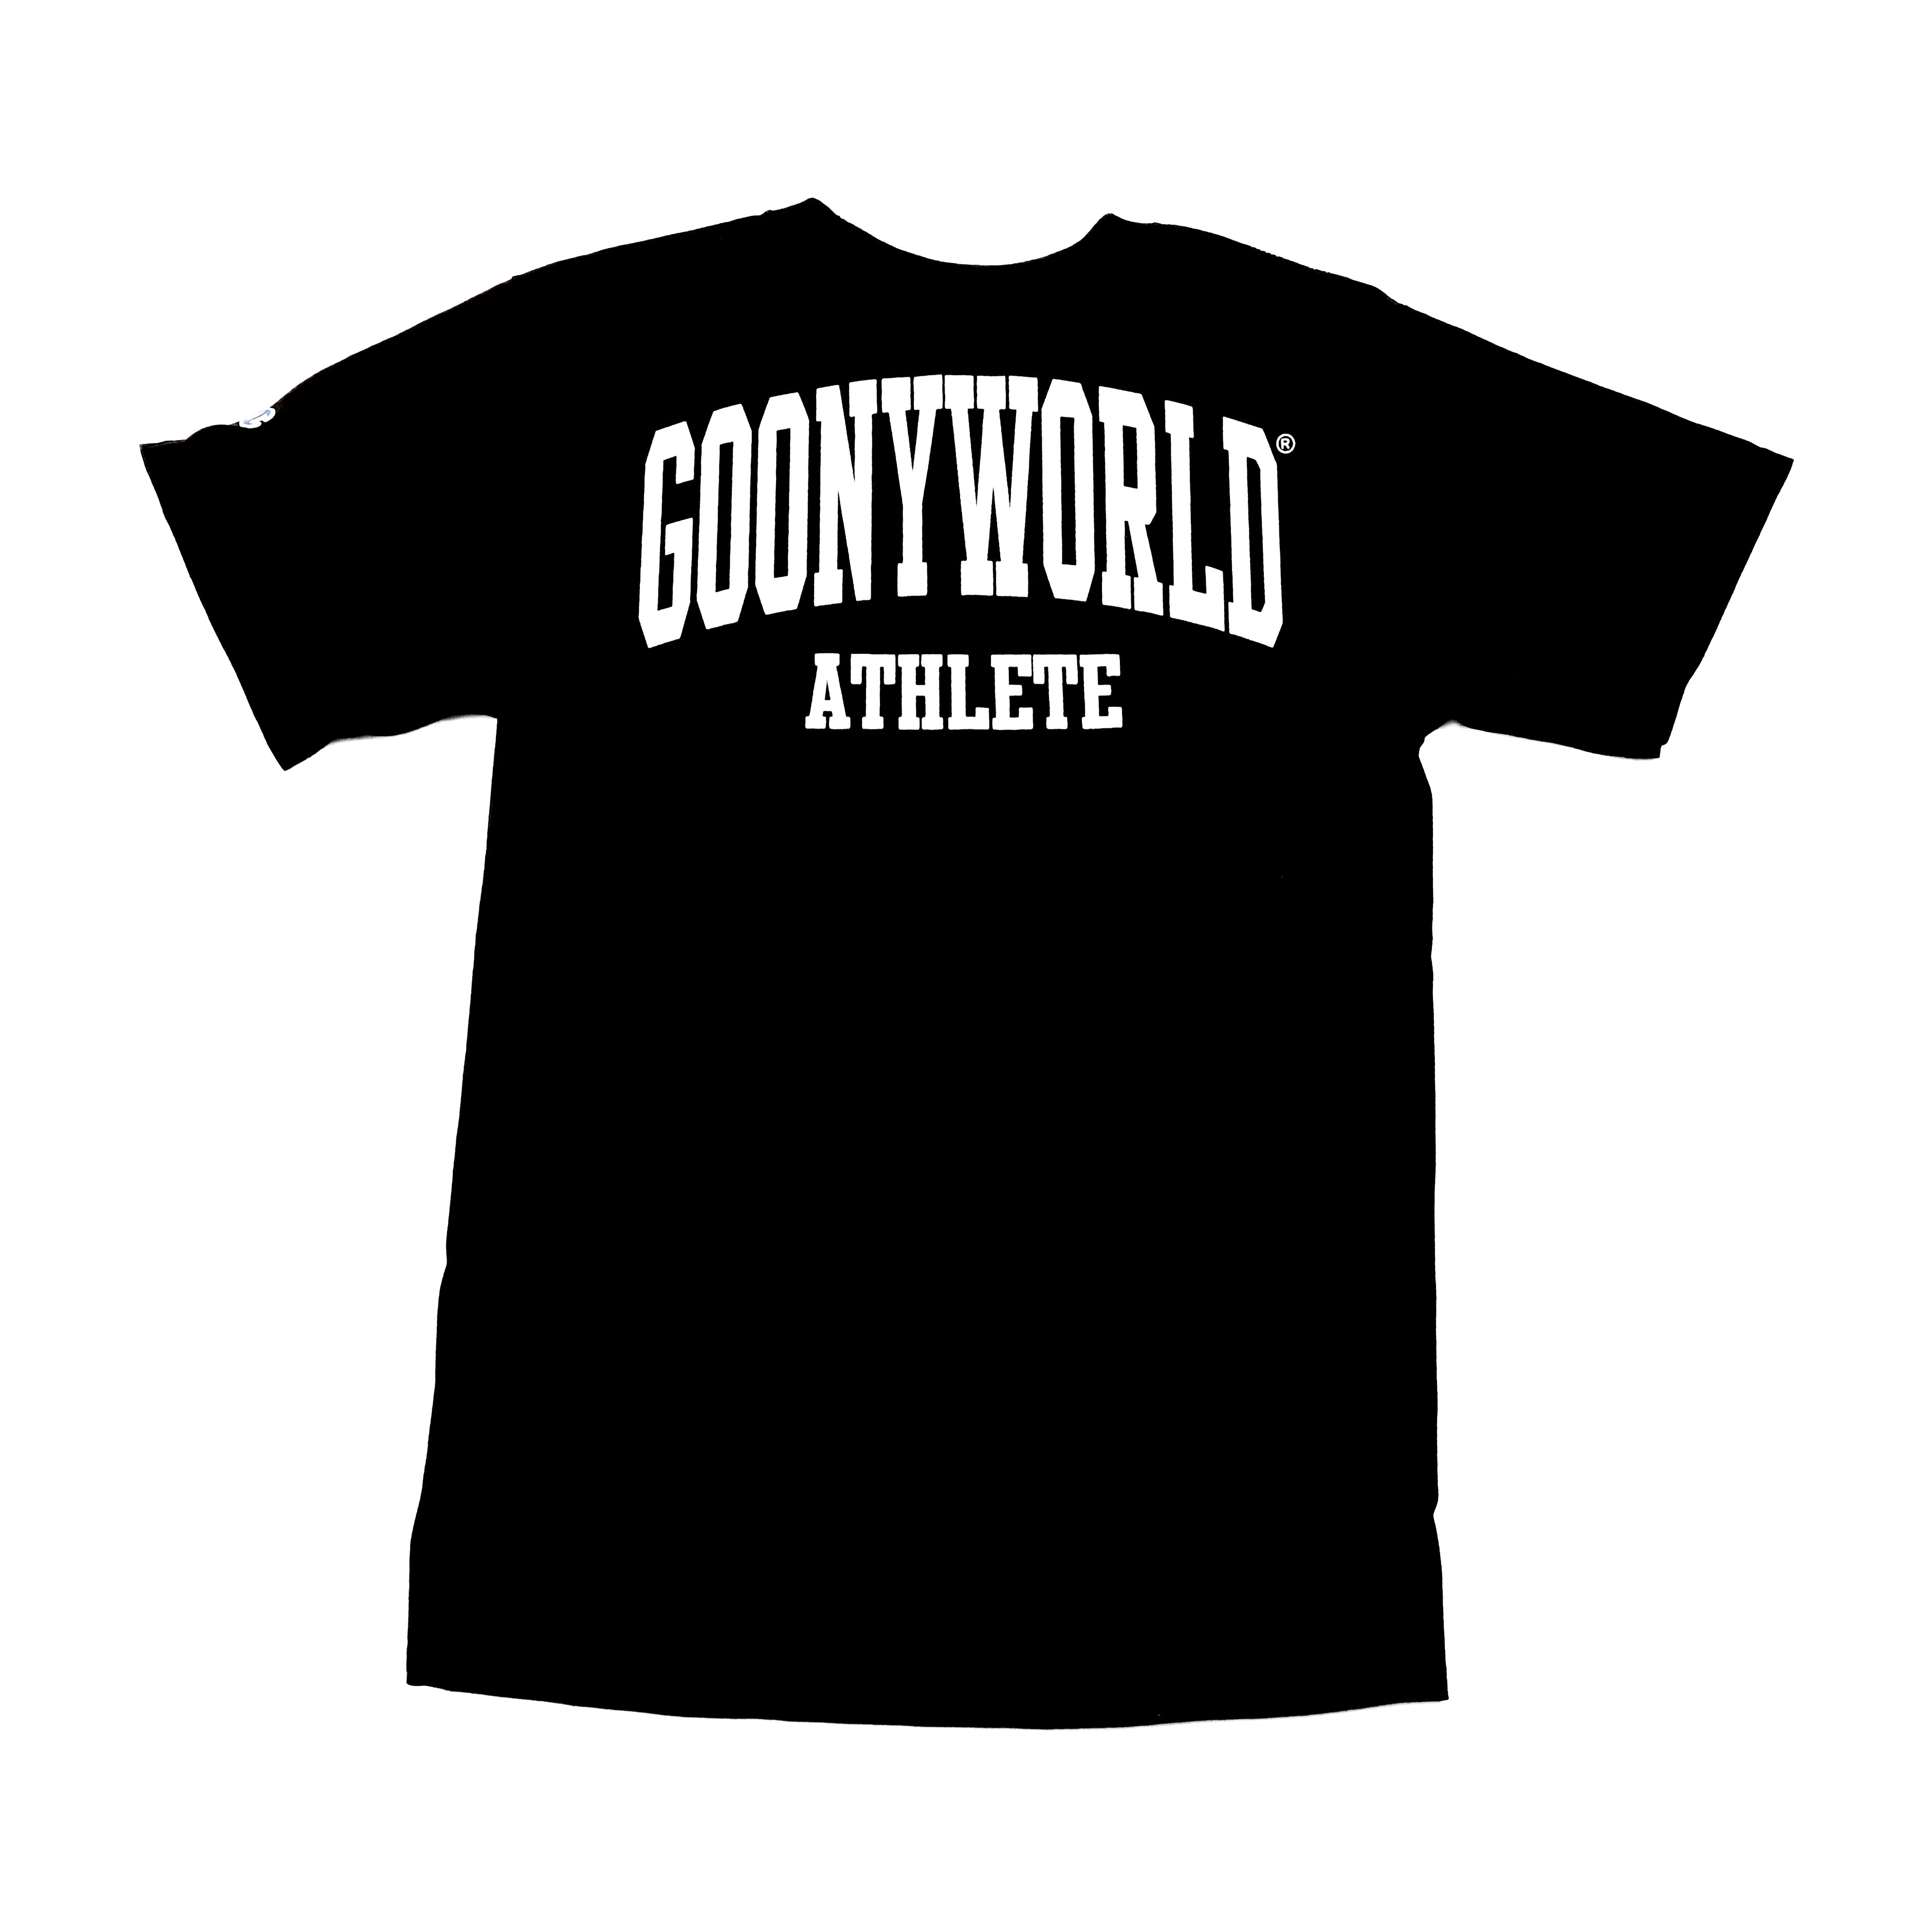 GOONYWORLD® ATHLETE T-SHIRT BLACK